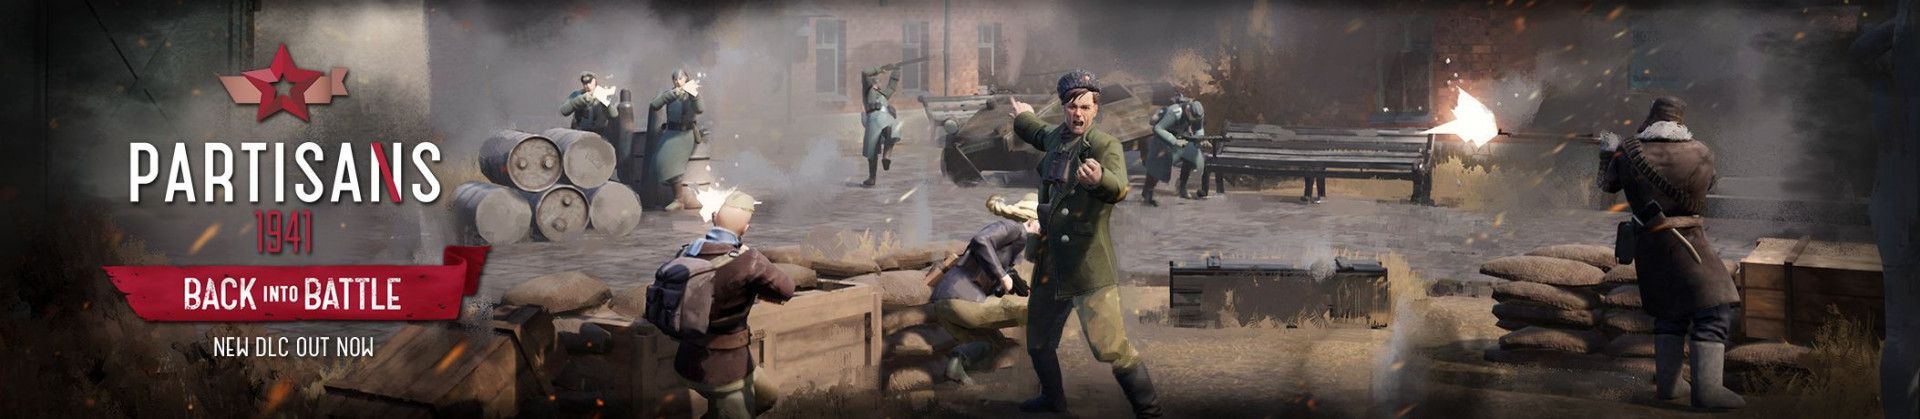 Partisans 1941: релиз DLC «Back into Battle»